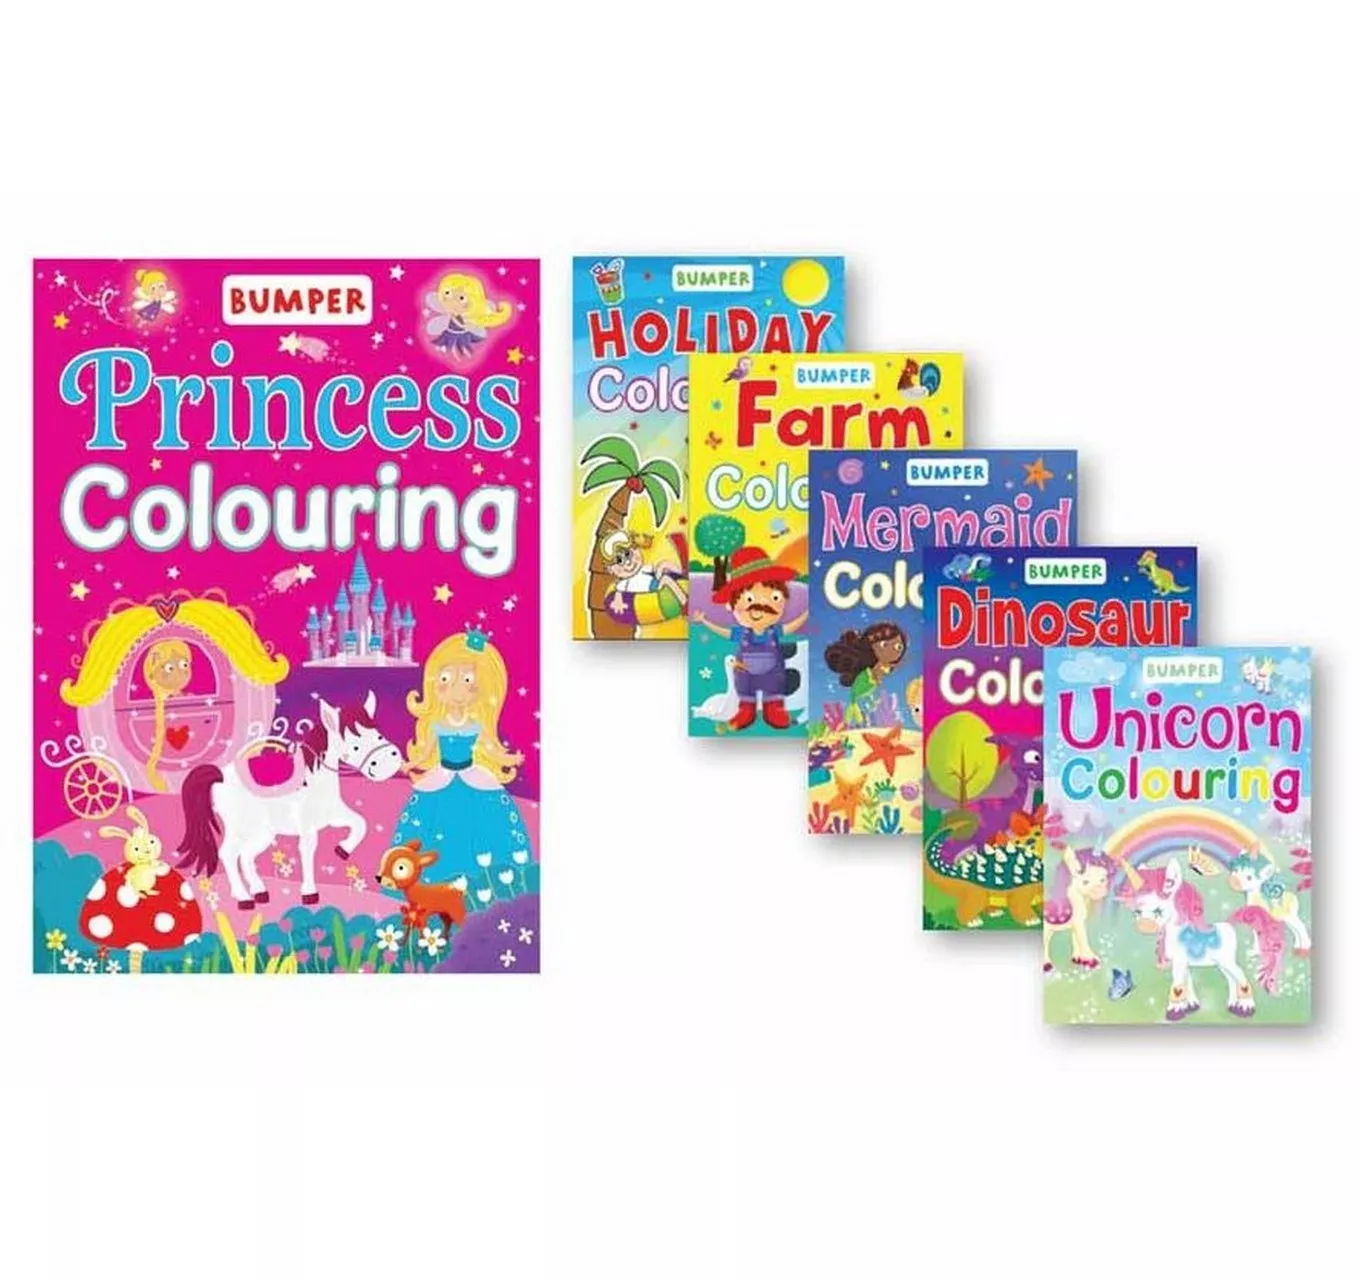 Bumper Colouring Book - Each